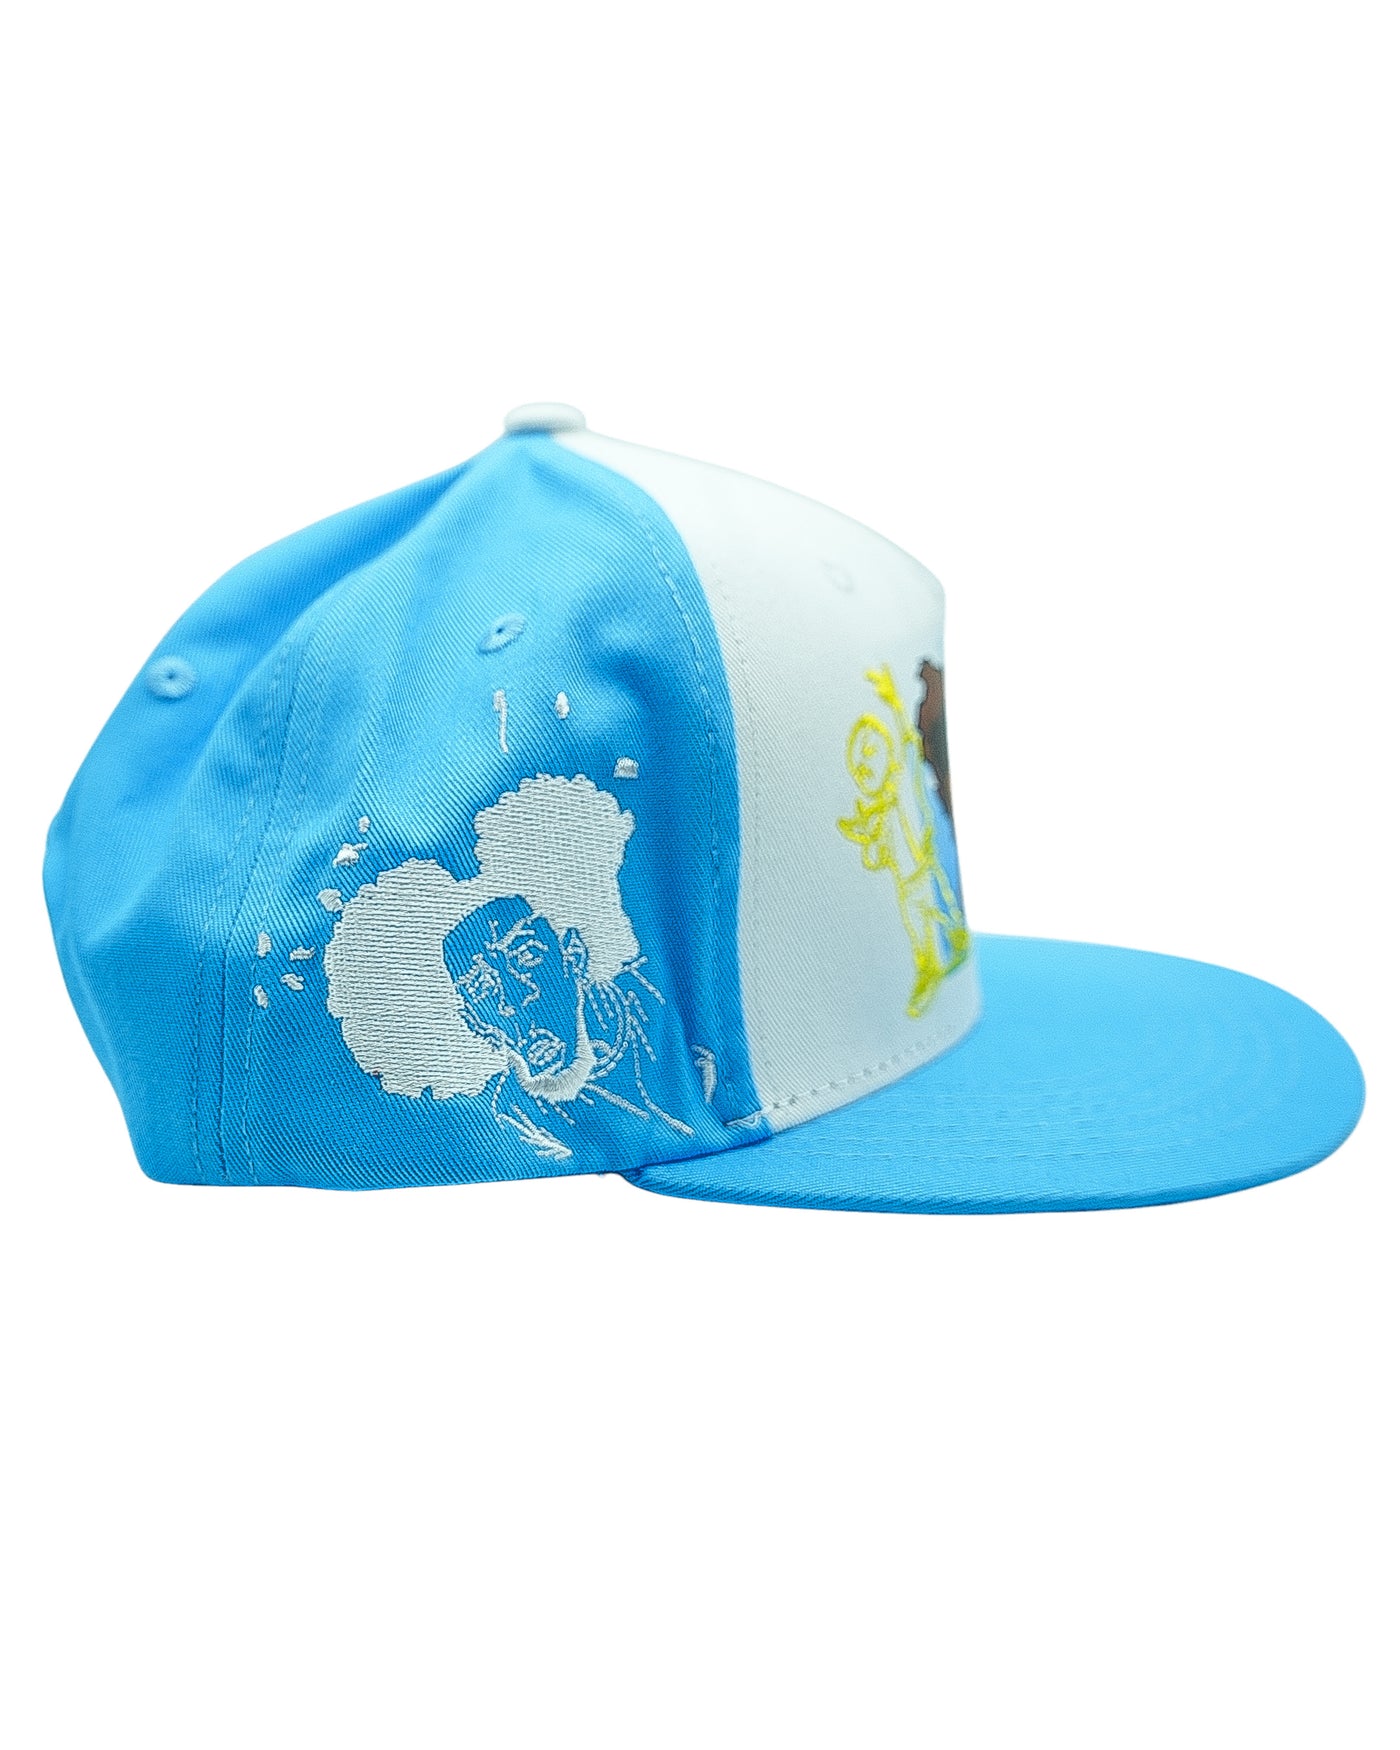 The Boondocks Gold Winners N.C Blue Snapback Hat